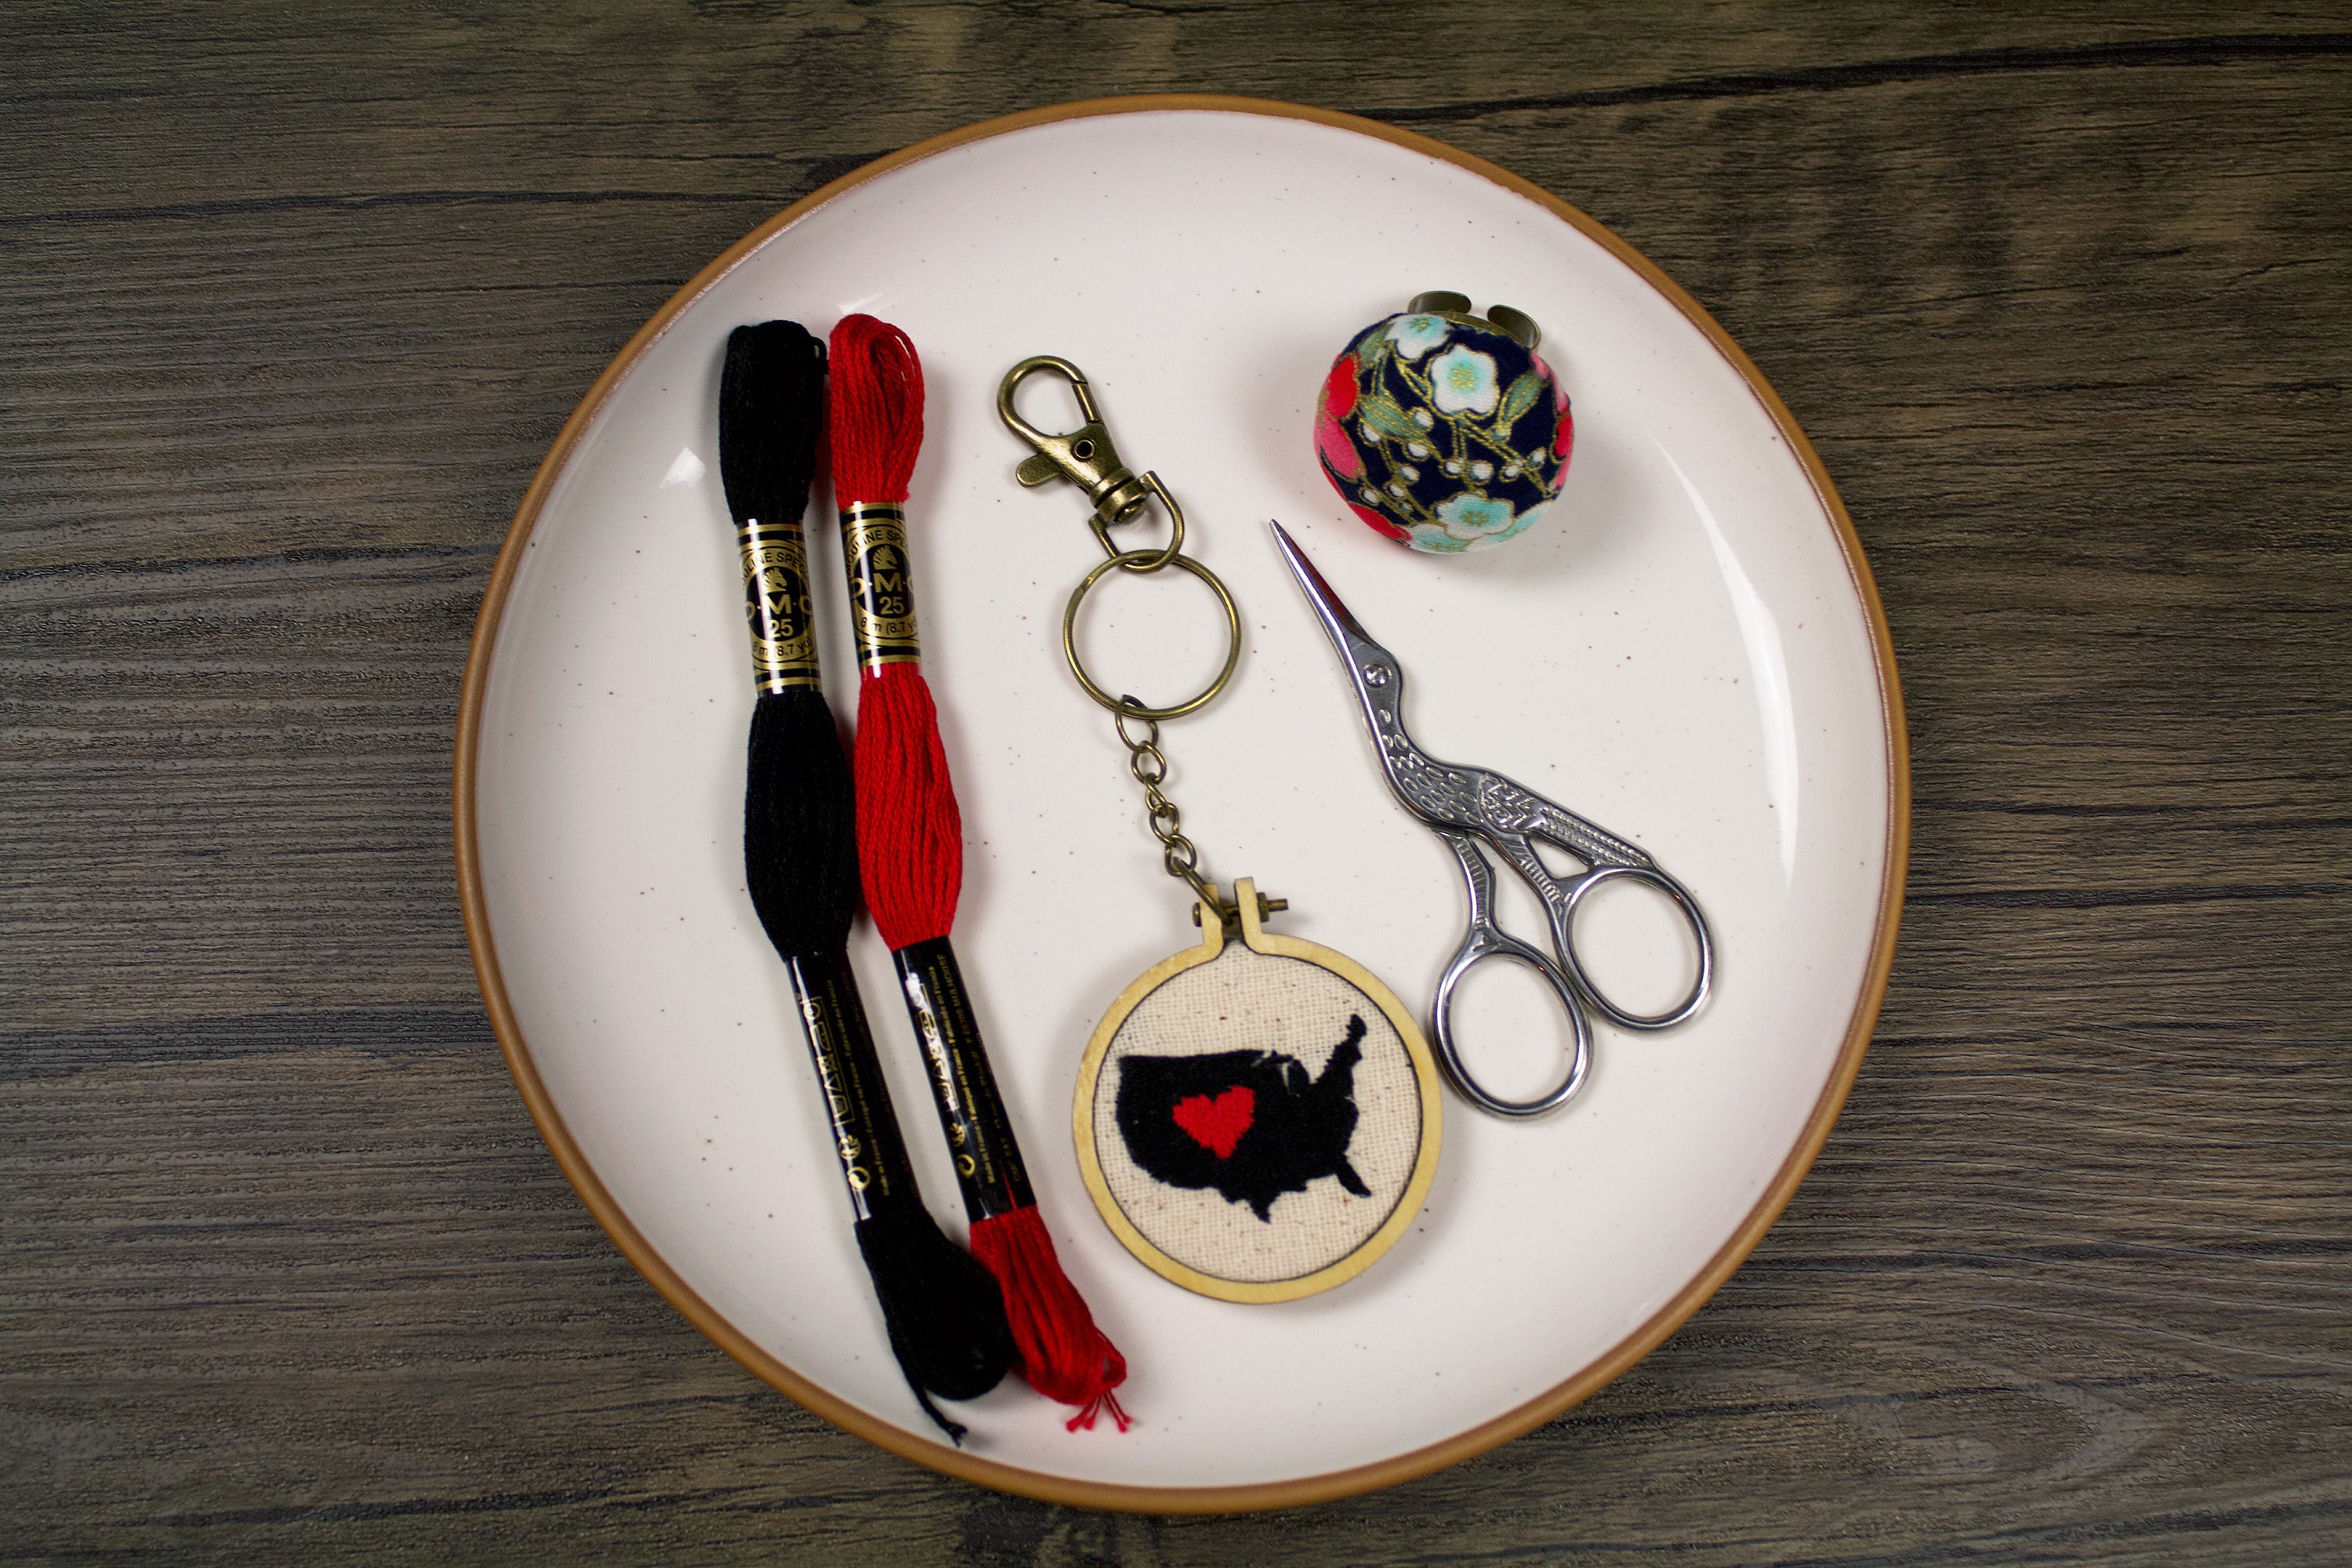 DIY Keychain Painting Kit, Craft kit, DIY kit, jewelry kit